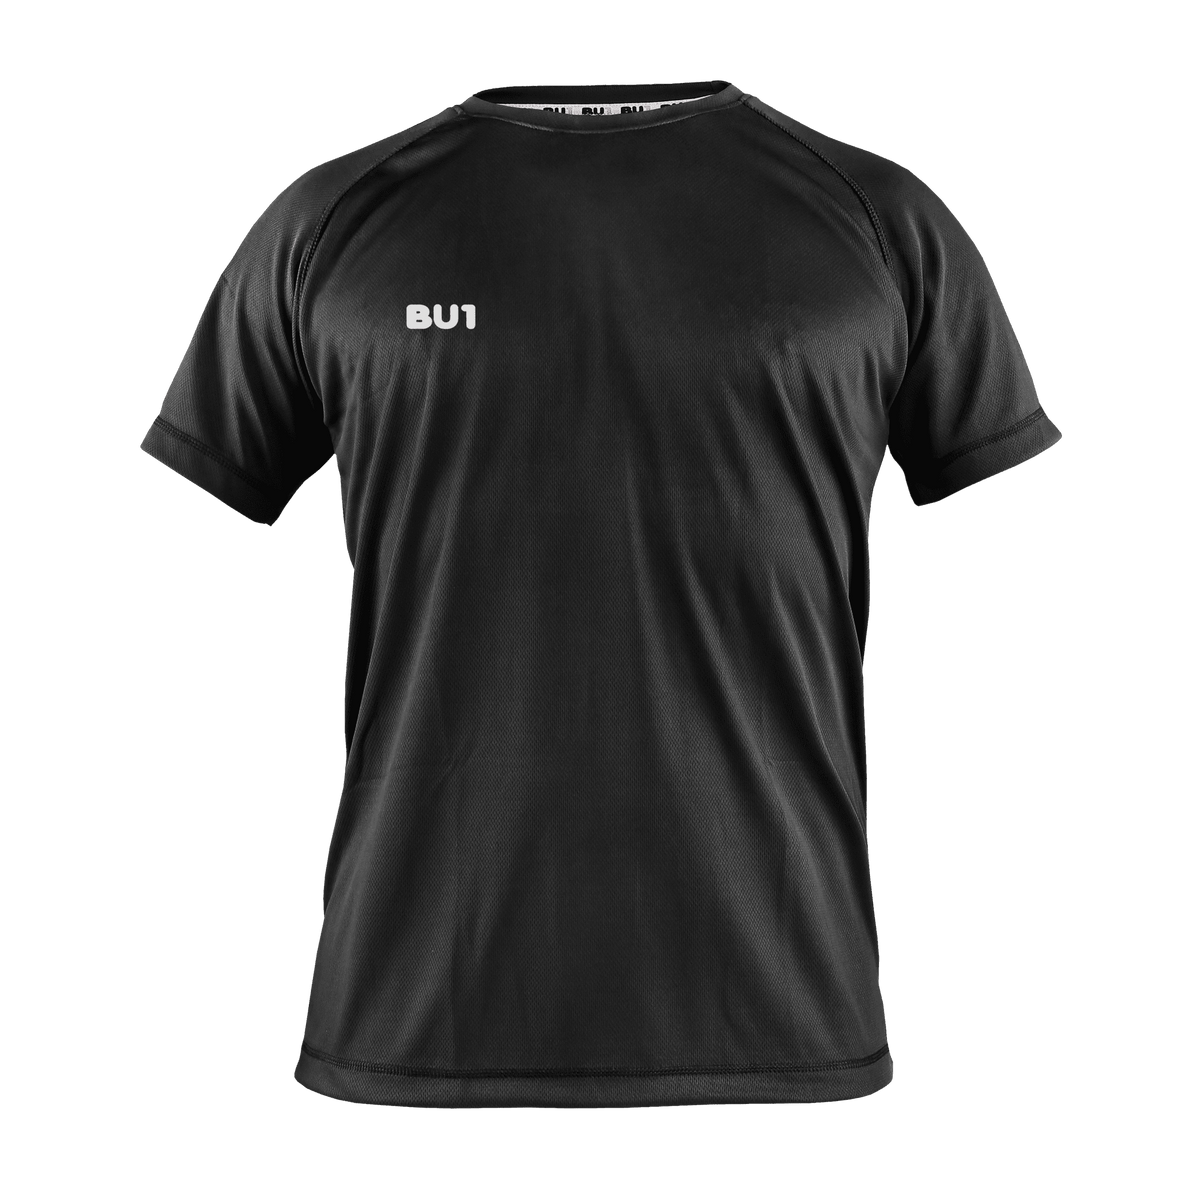 Camiseta de entrenamiento BU1 negra